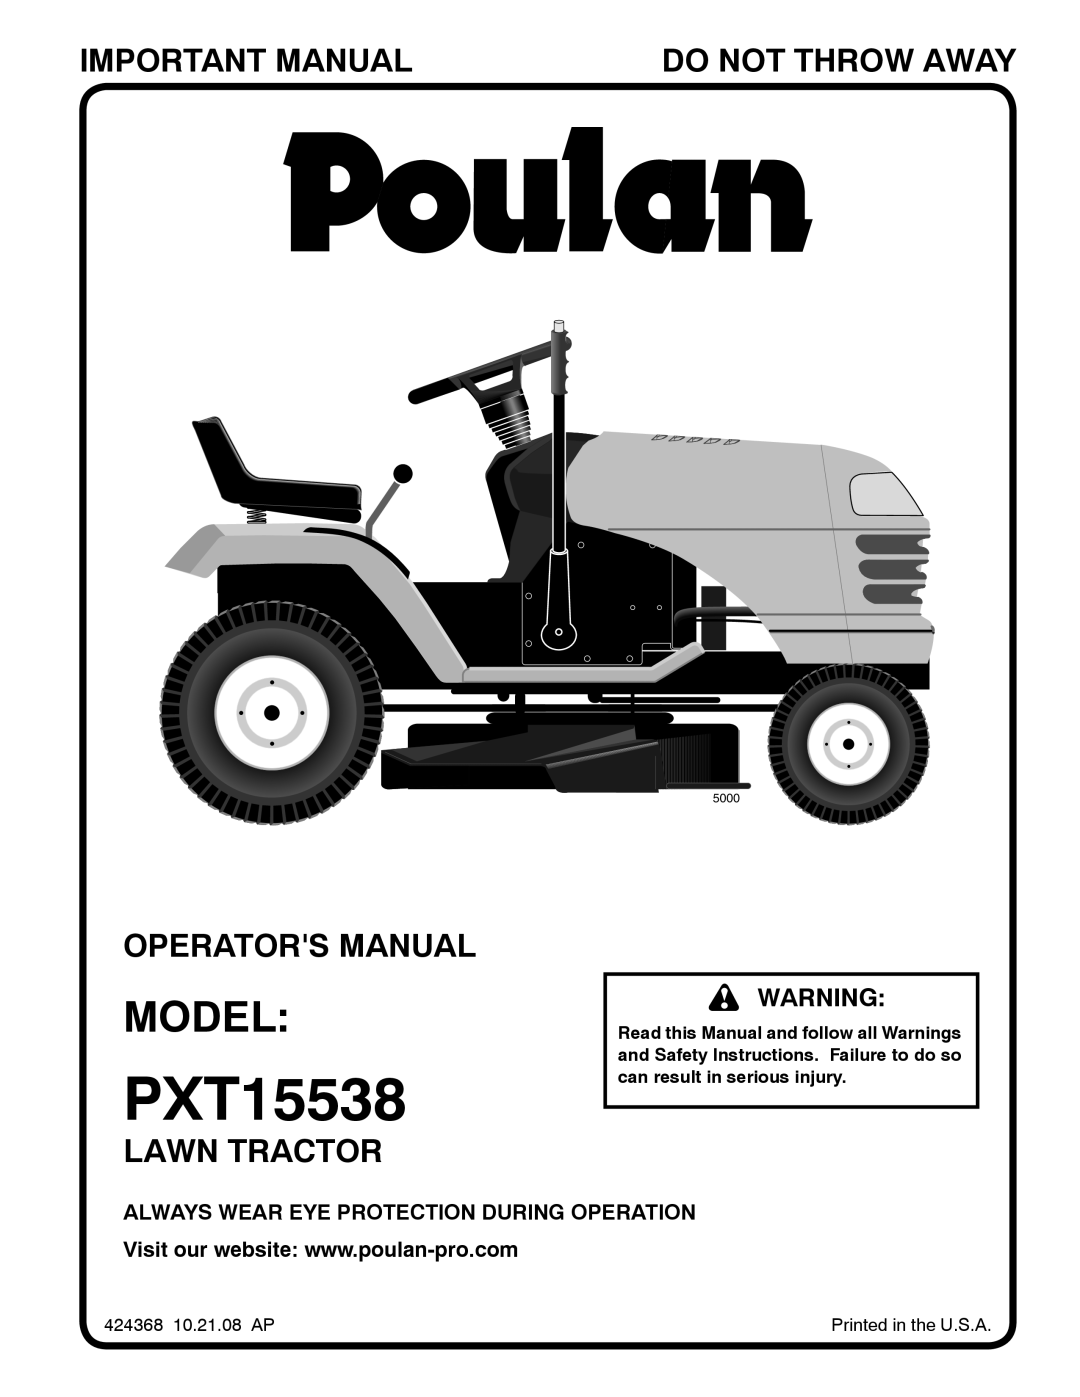 Poulan 424368 manual Important Manual, Do Not Throw Away, Operators Manual, Lawn Tractor, PXT15538, Model, 5000 